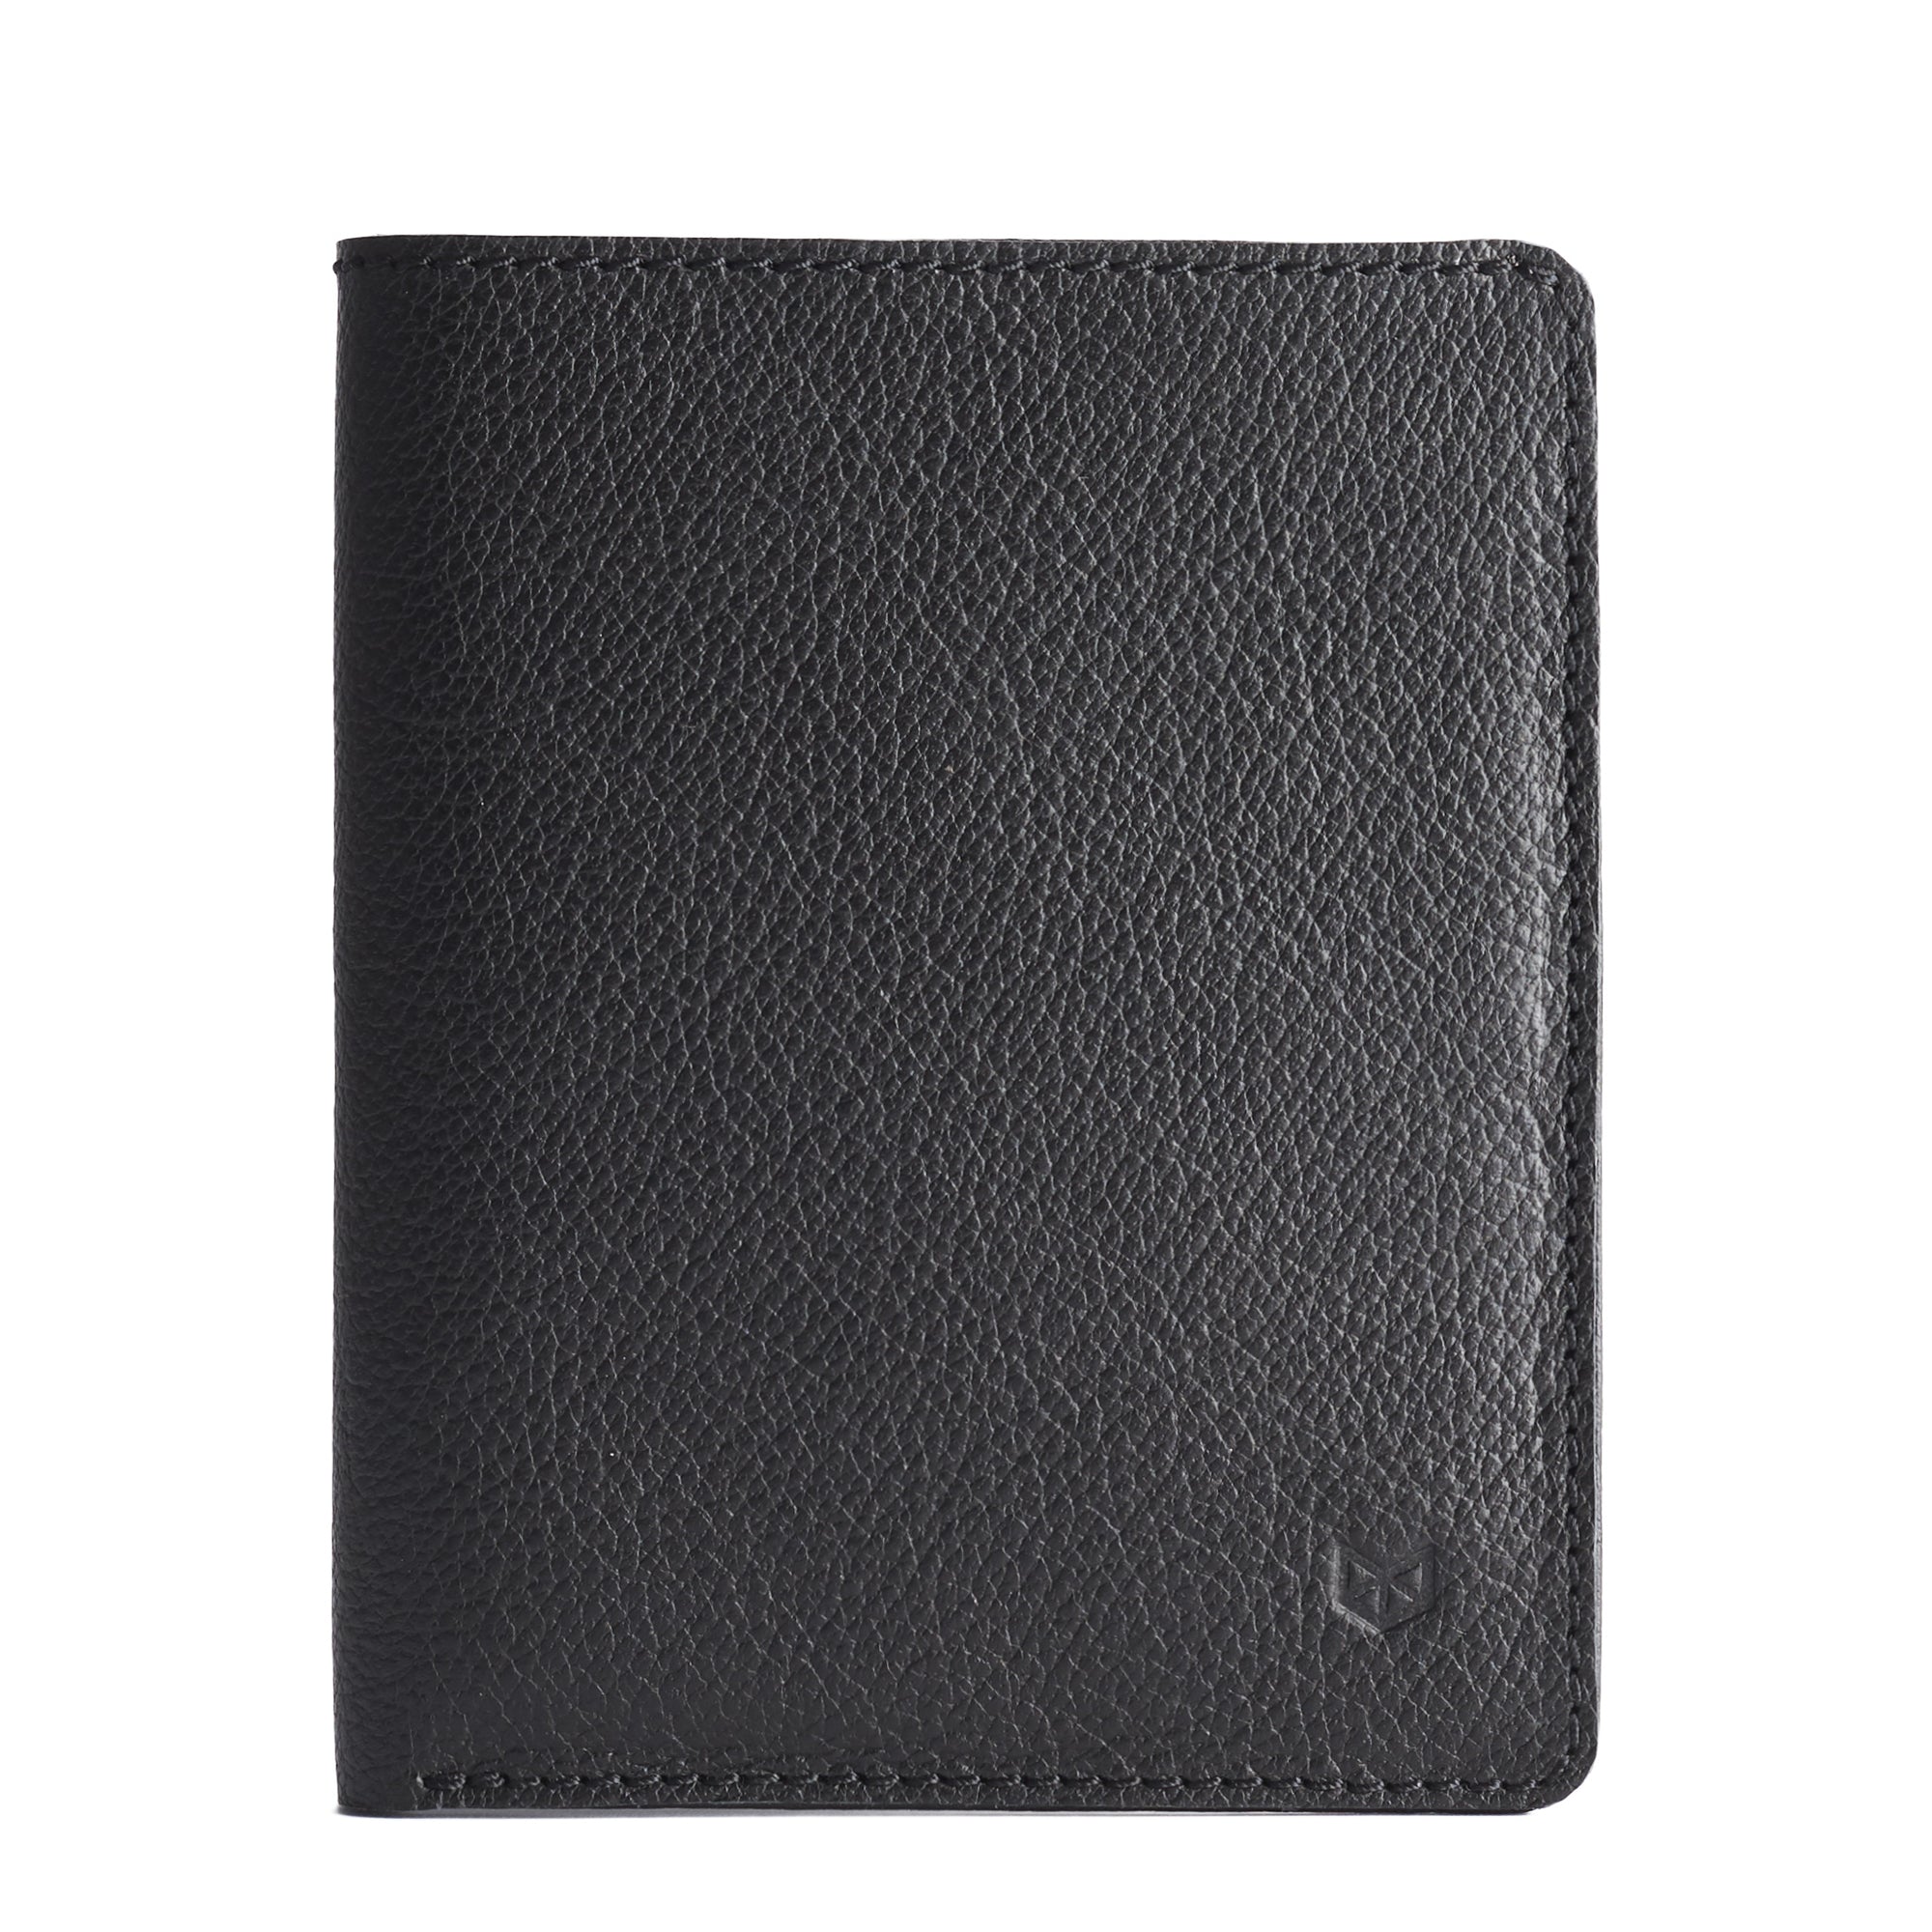 Cover. Pocket Passport Holder Travel Wallet Black by Capra Leather